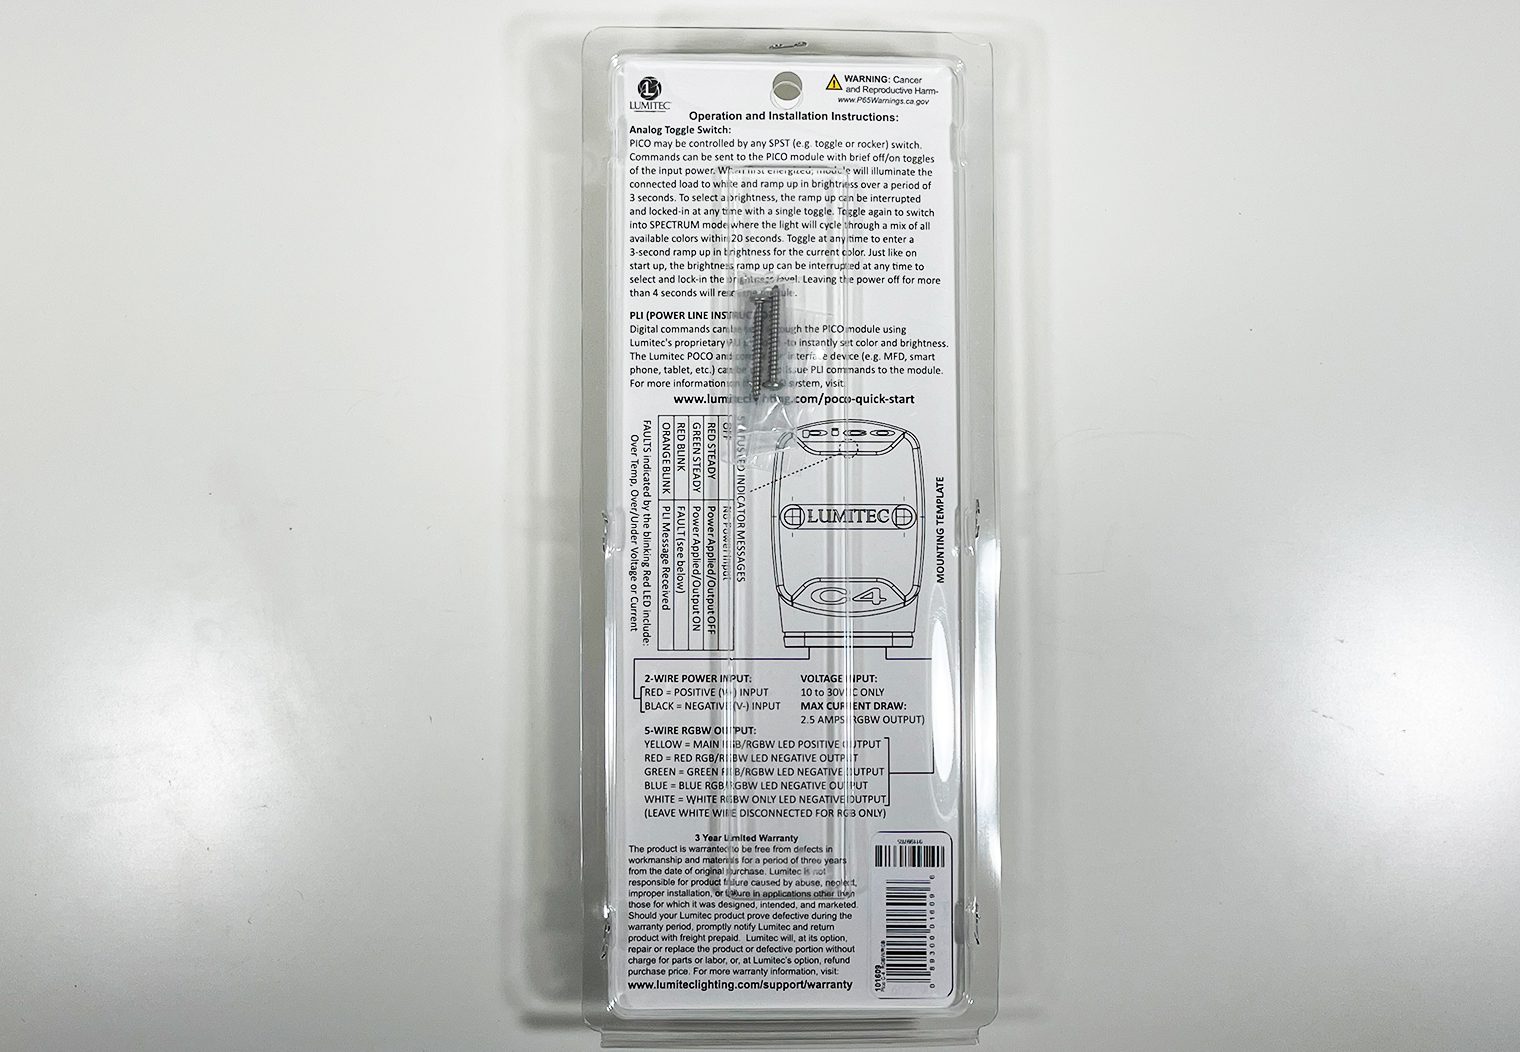 Lumitec Pico C4 rear packaging